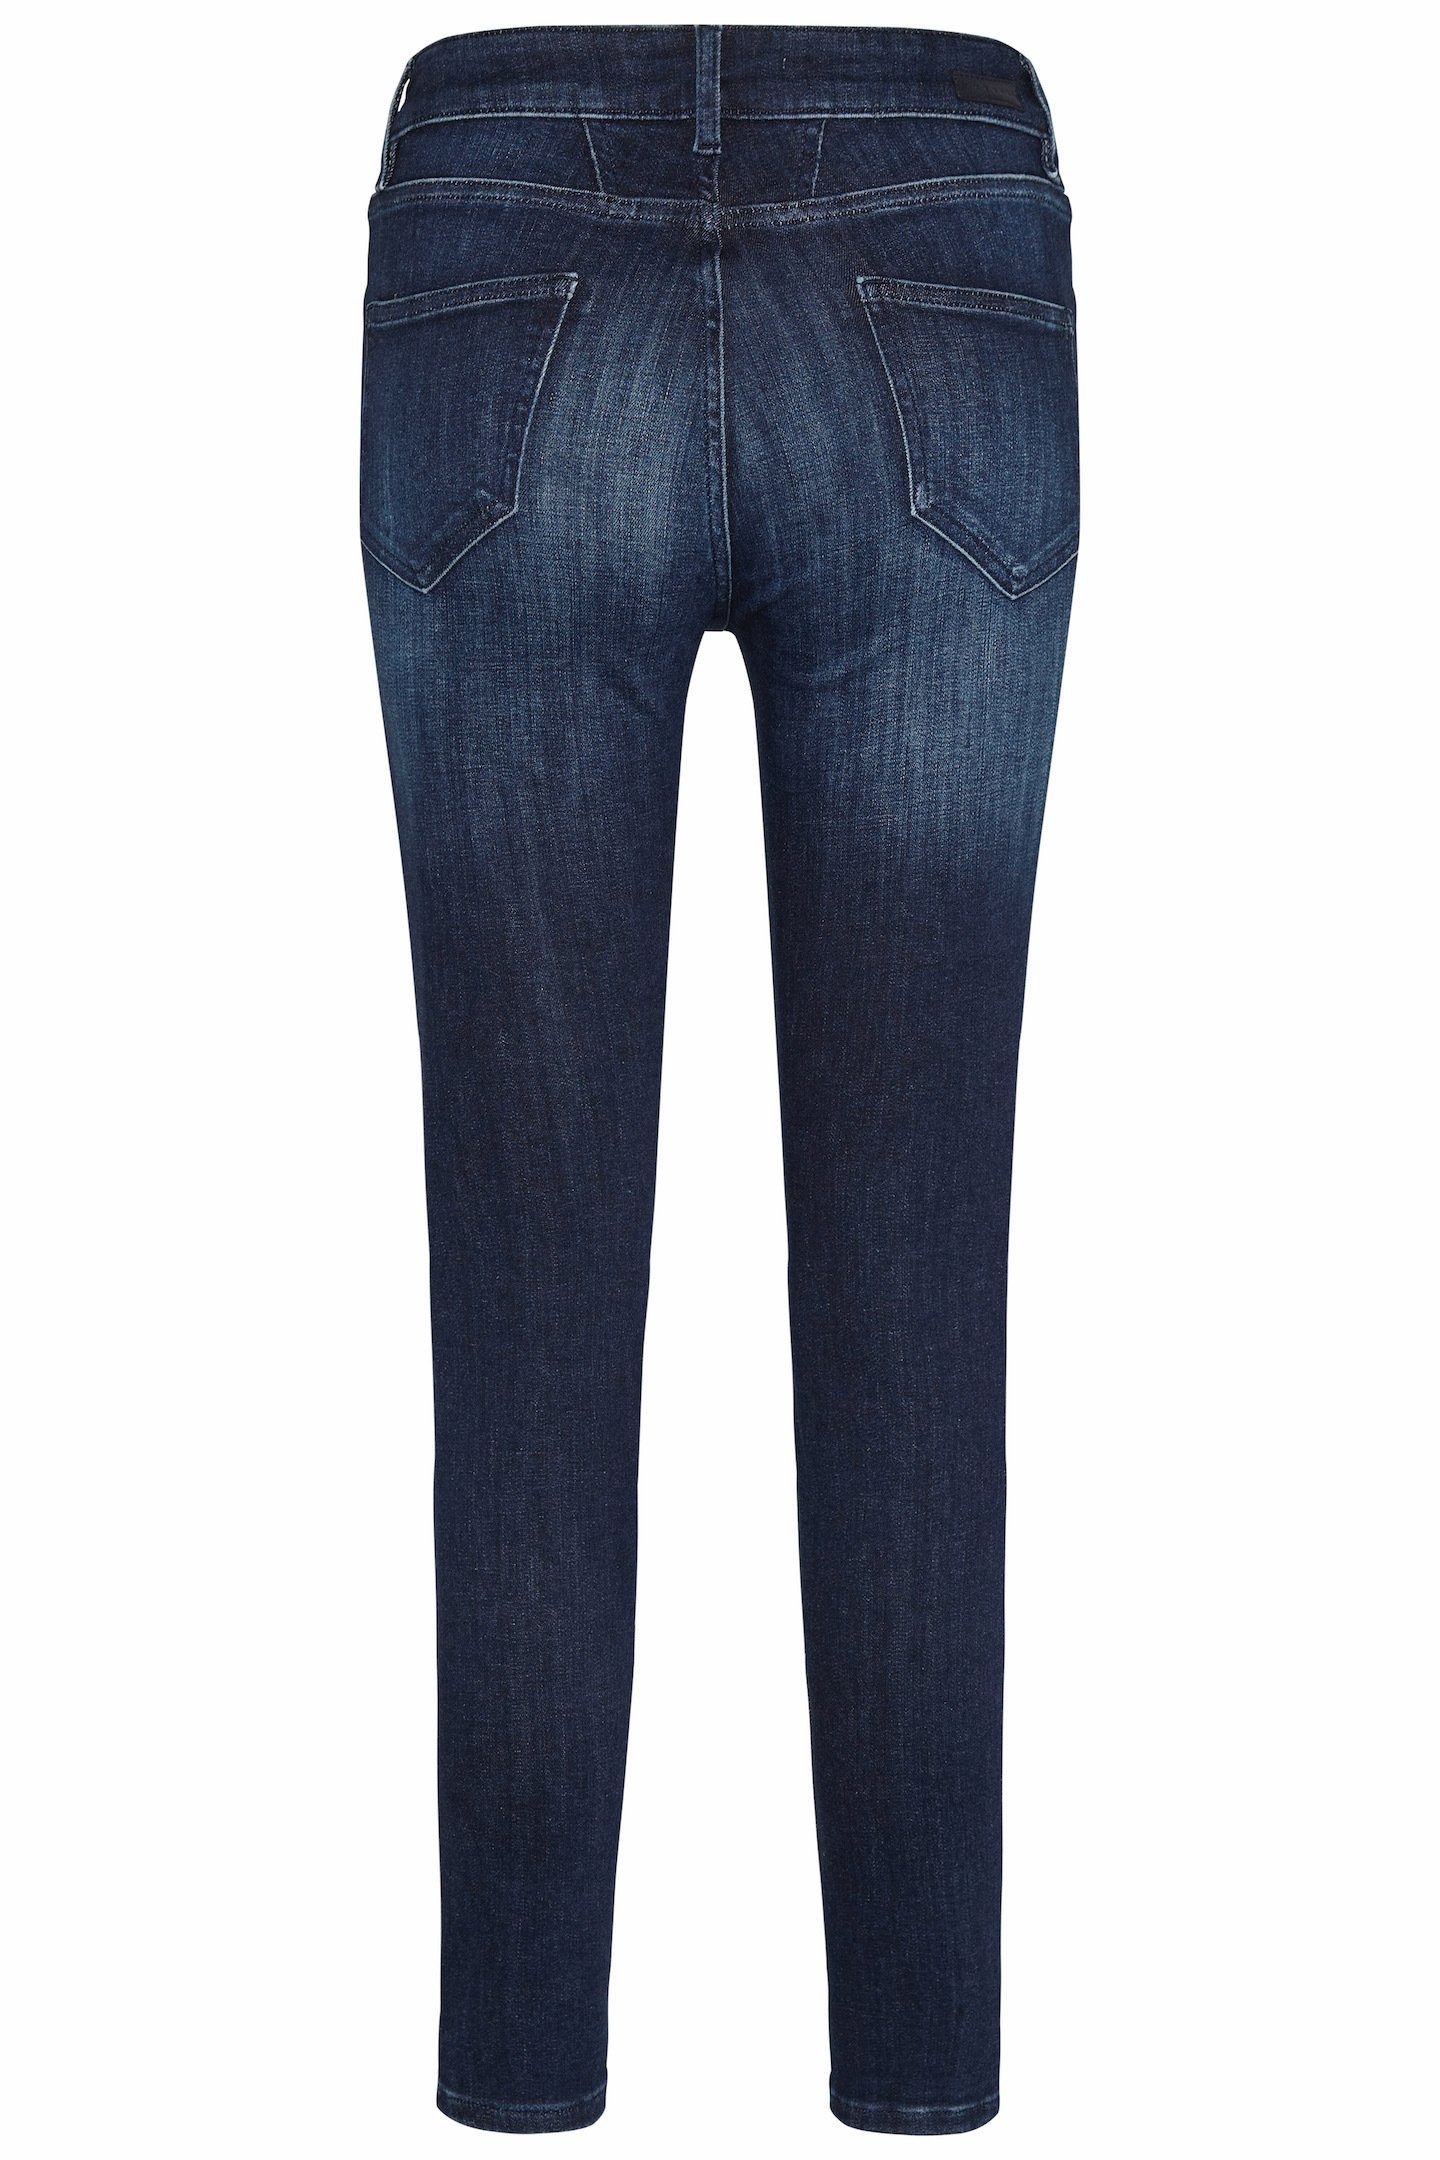 dunkelblau Used-Waschung 5-Pocket-Jeans bugatti leichte